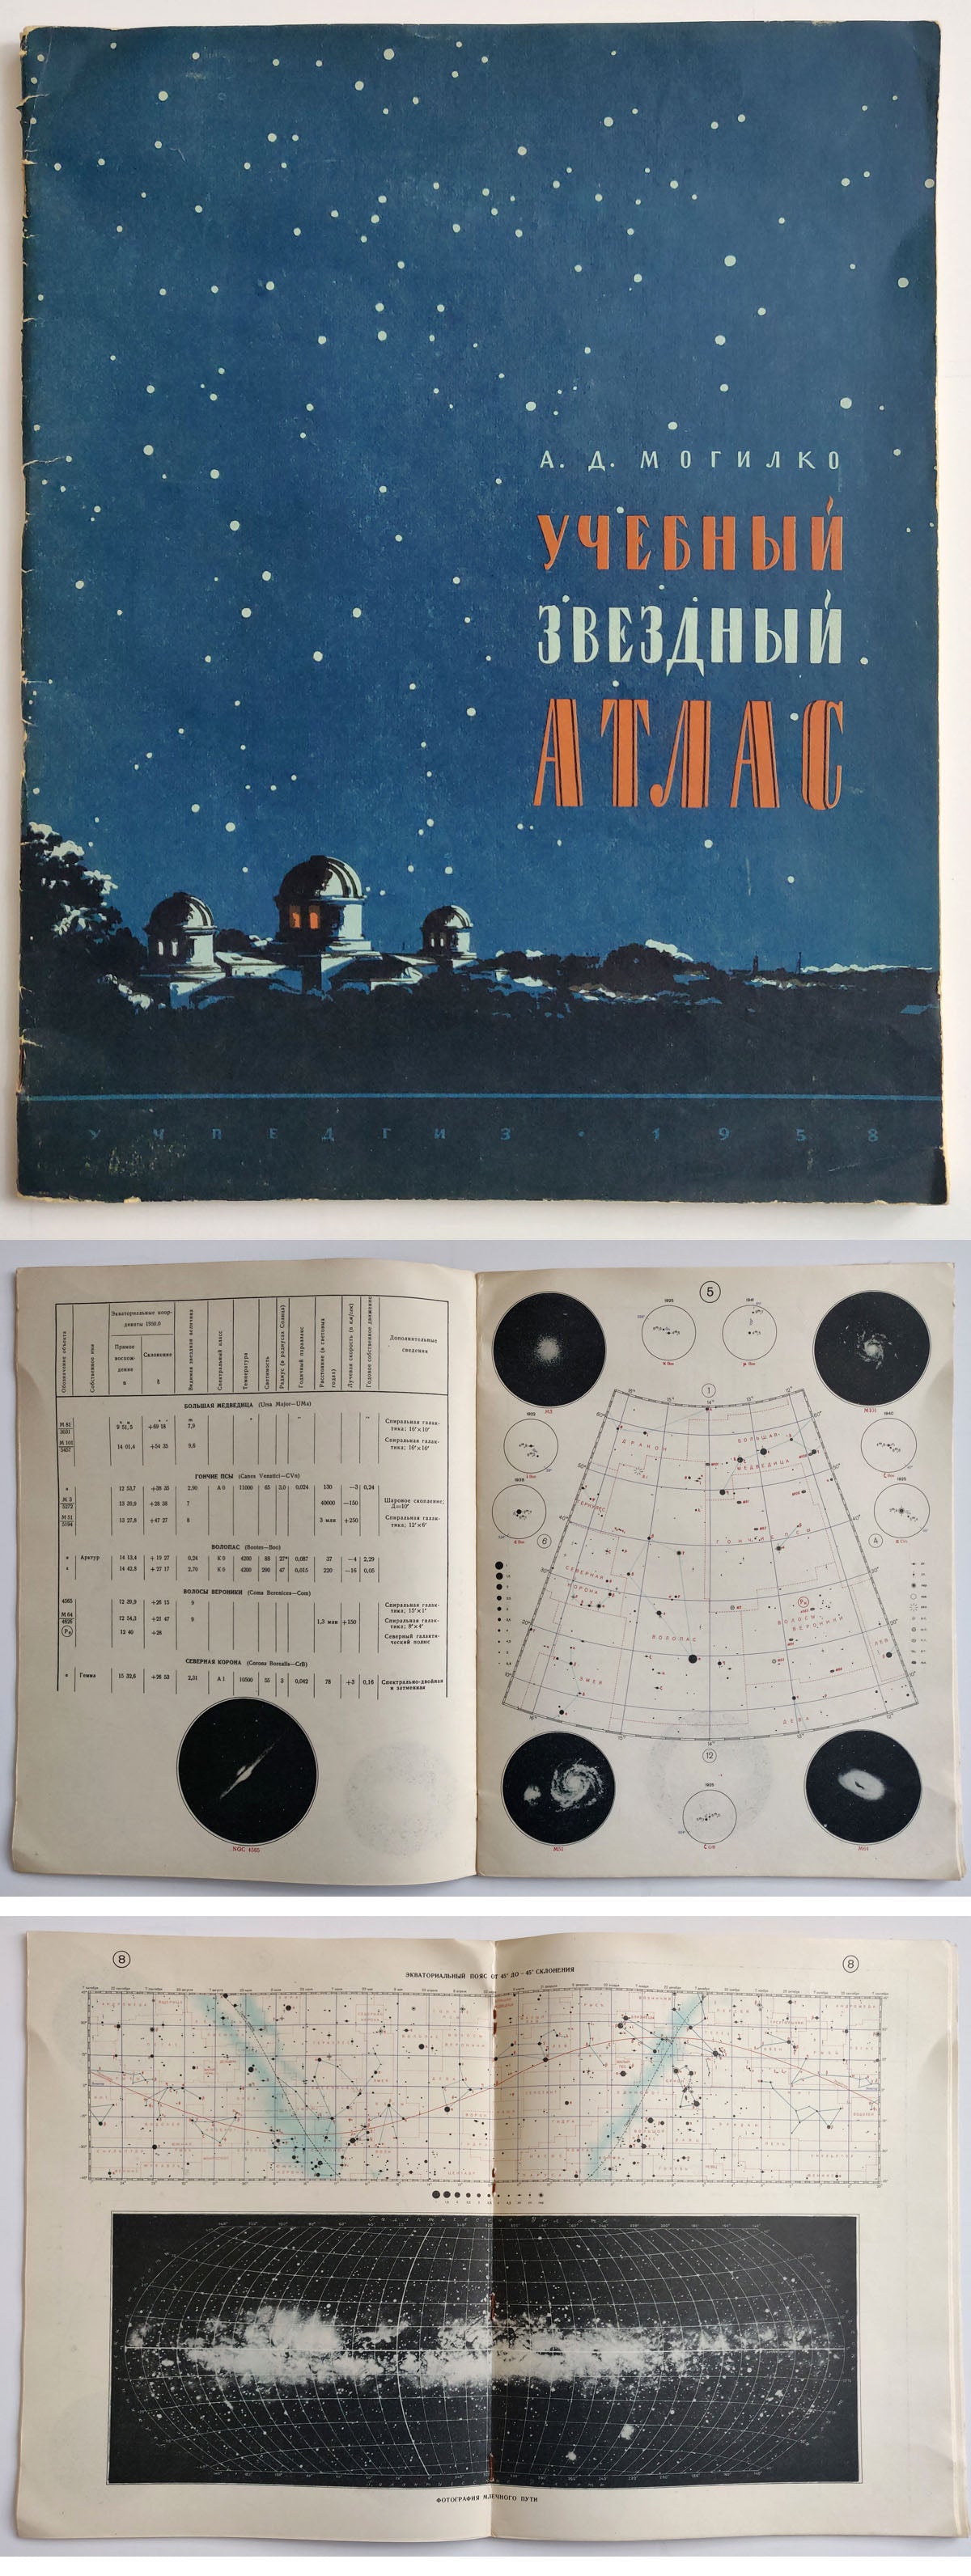 (Celestial - Space) "Educational Astronomical Atlas"